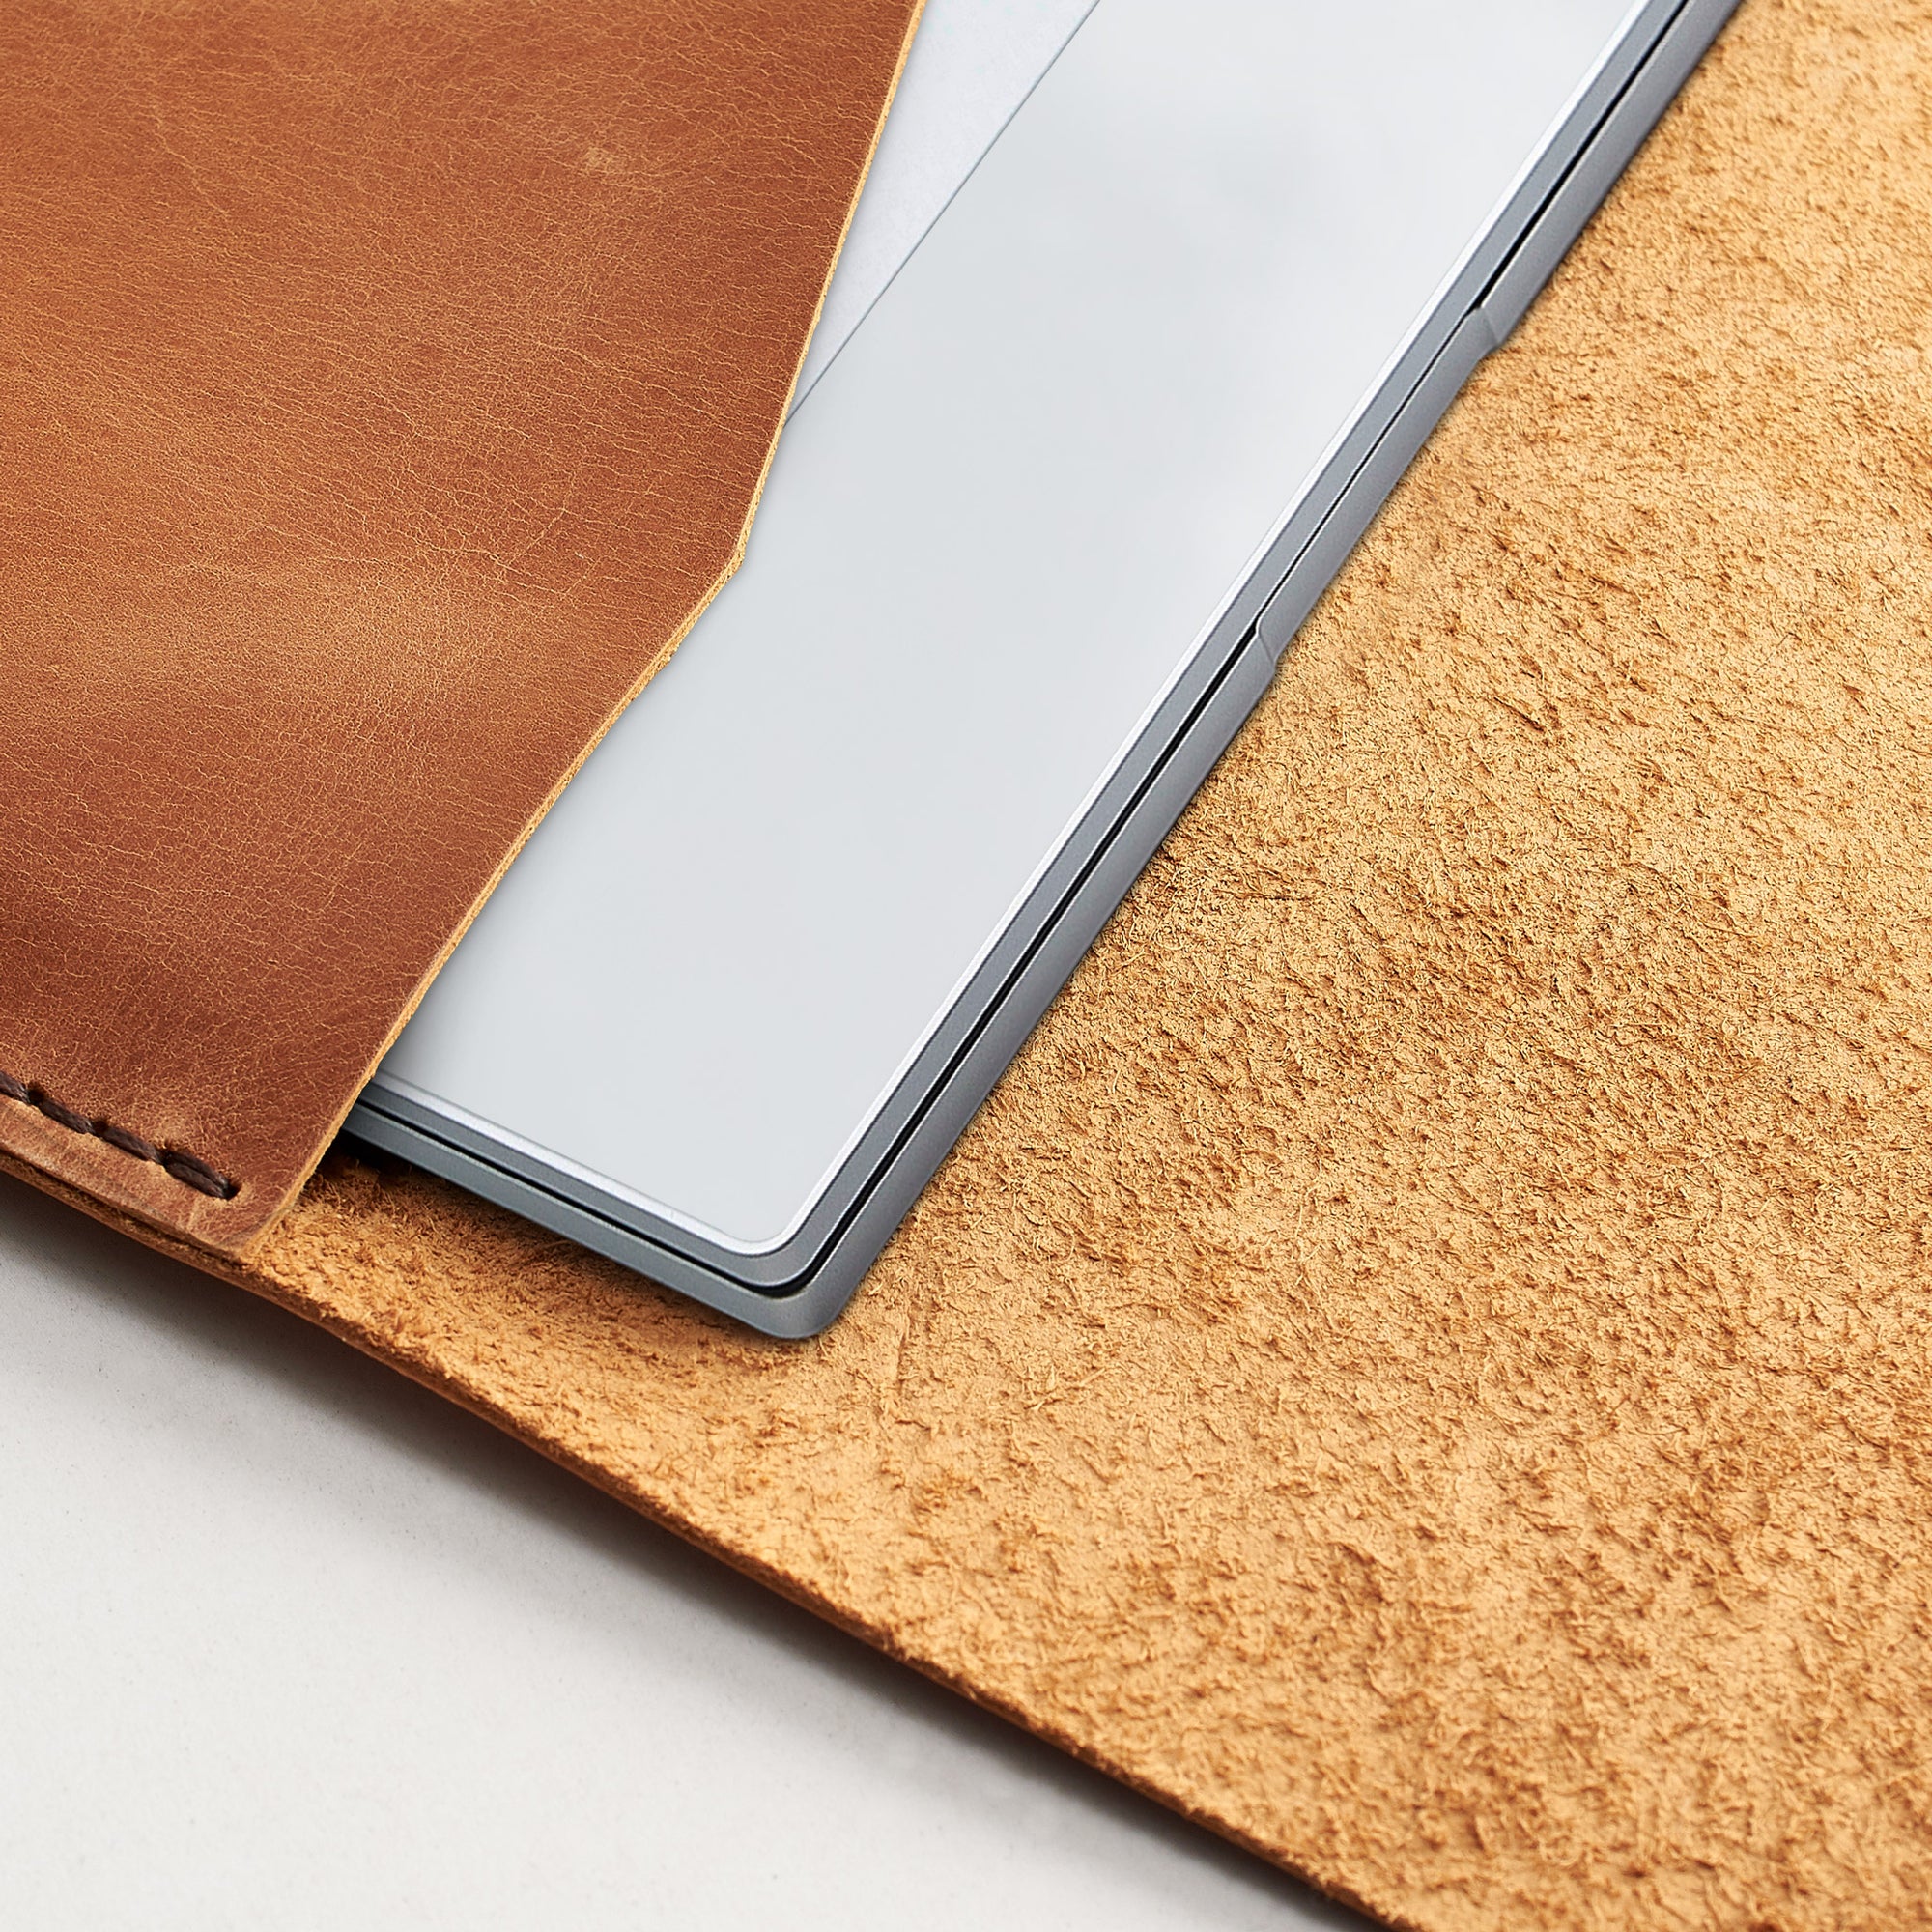 Soft interior. Google Pixelbook light brown leather sleeve for men